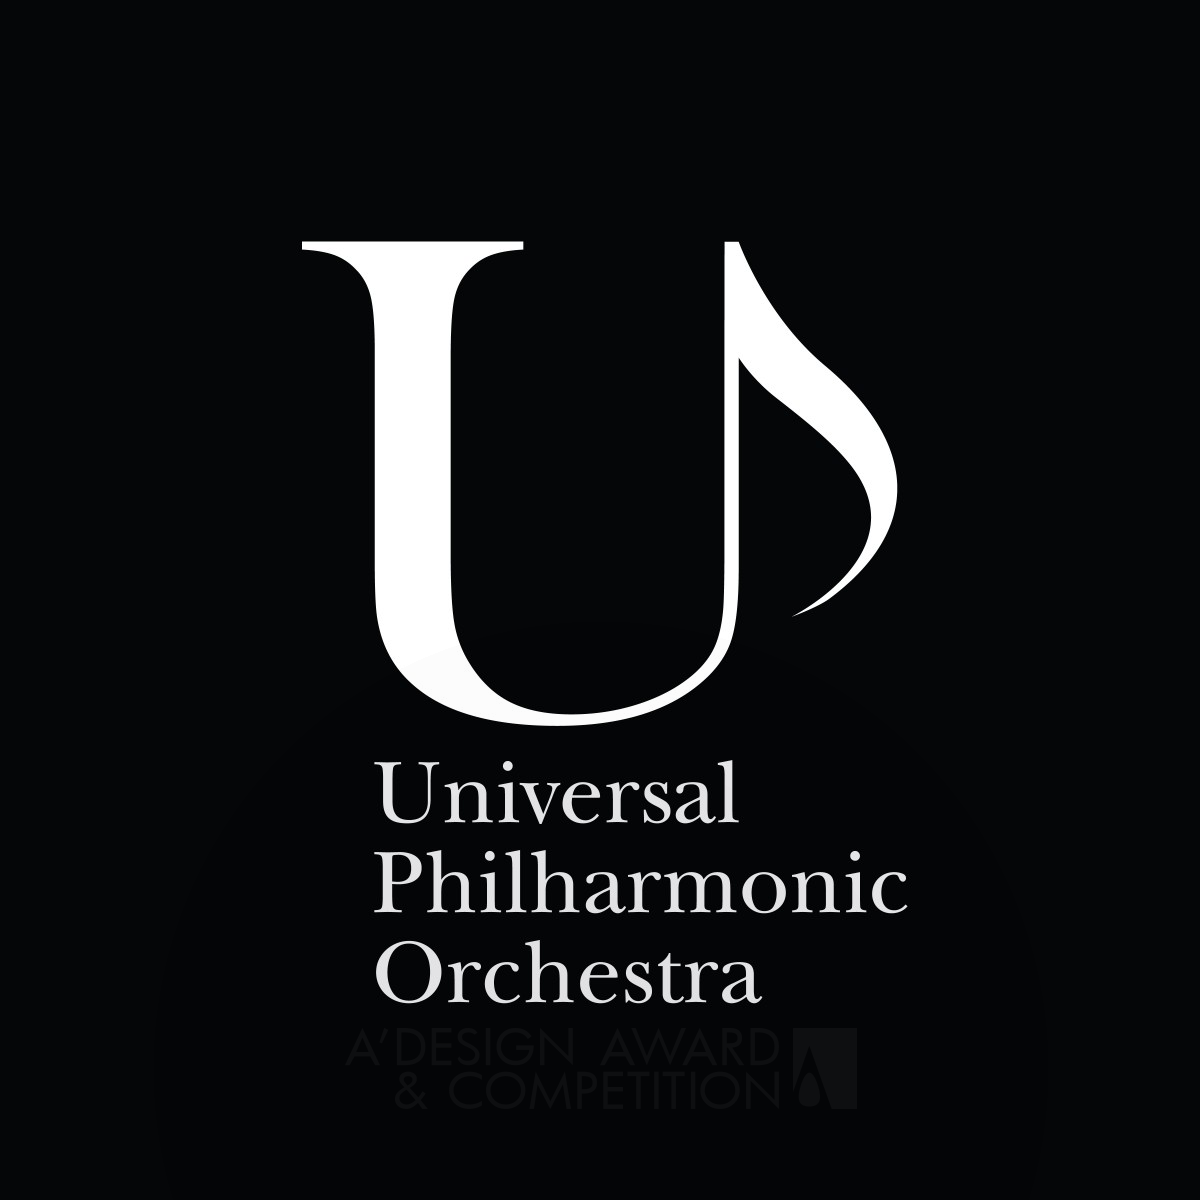 Universal Philharmonic Orchestra <b>Corporate Identity